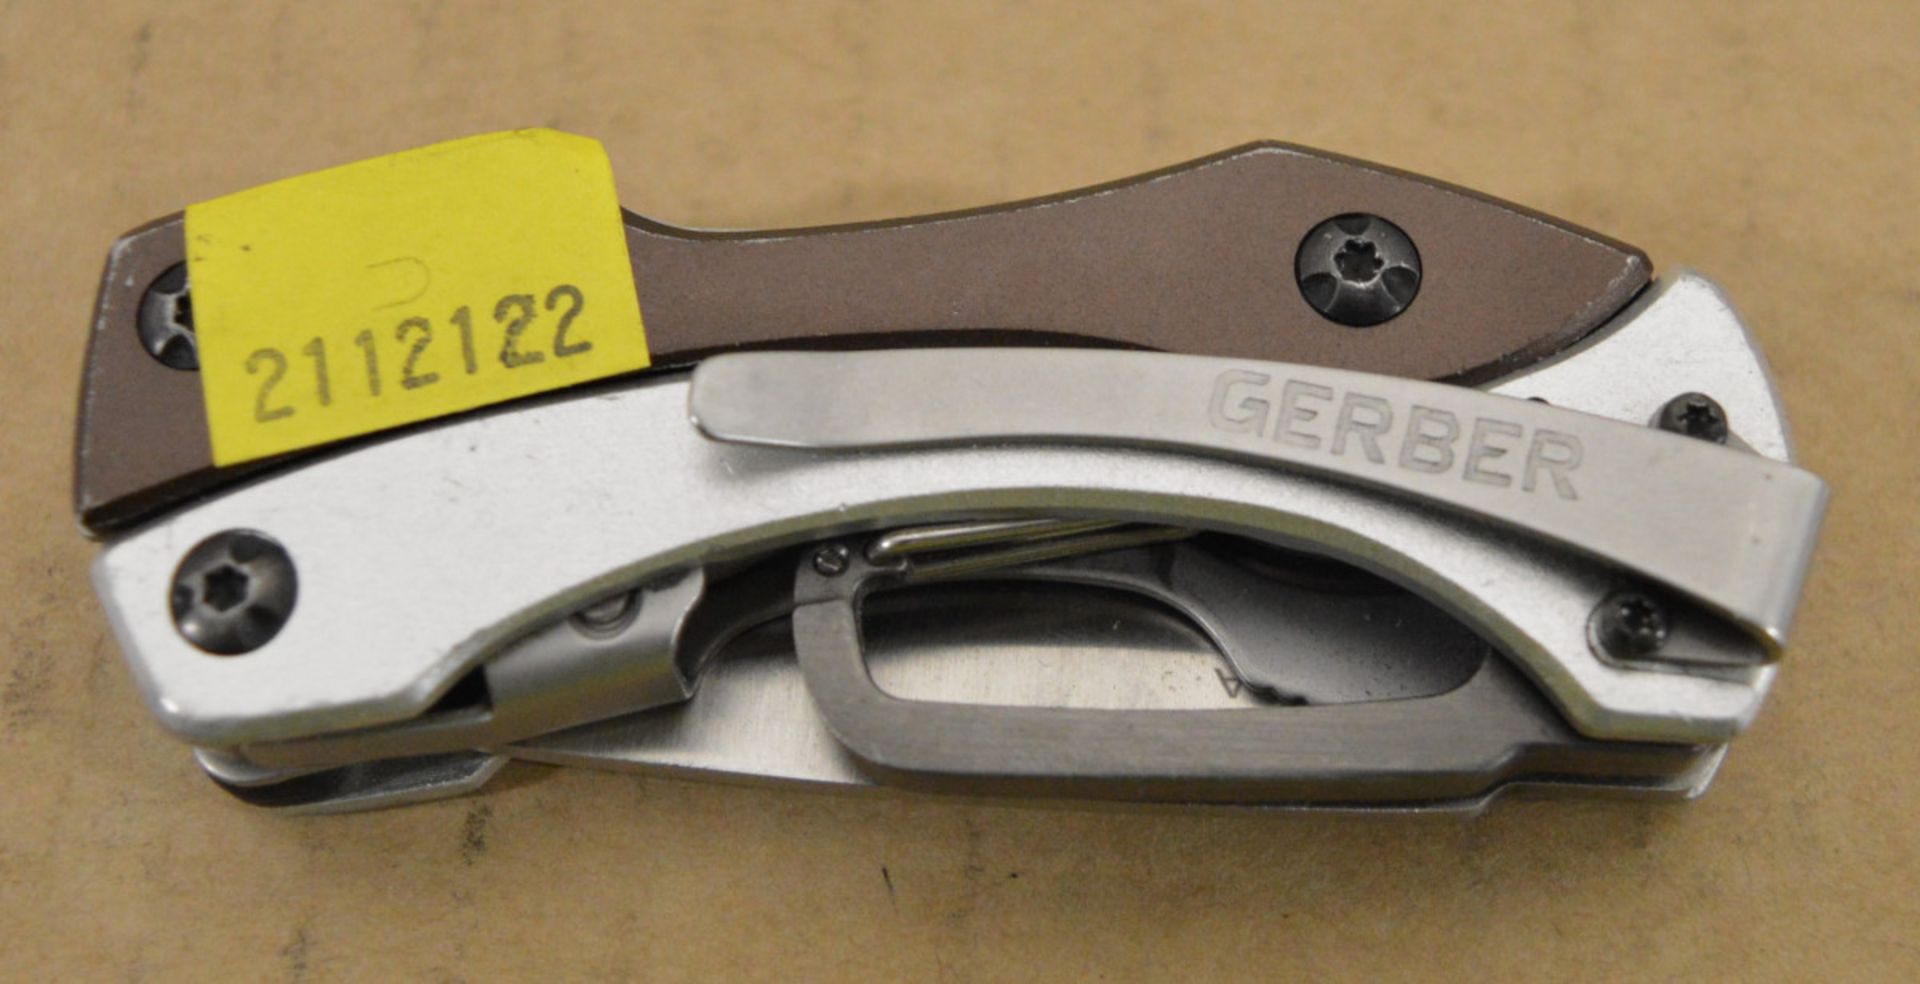 Gerber Crucial Penknife - Image 2 of 6